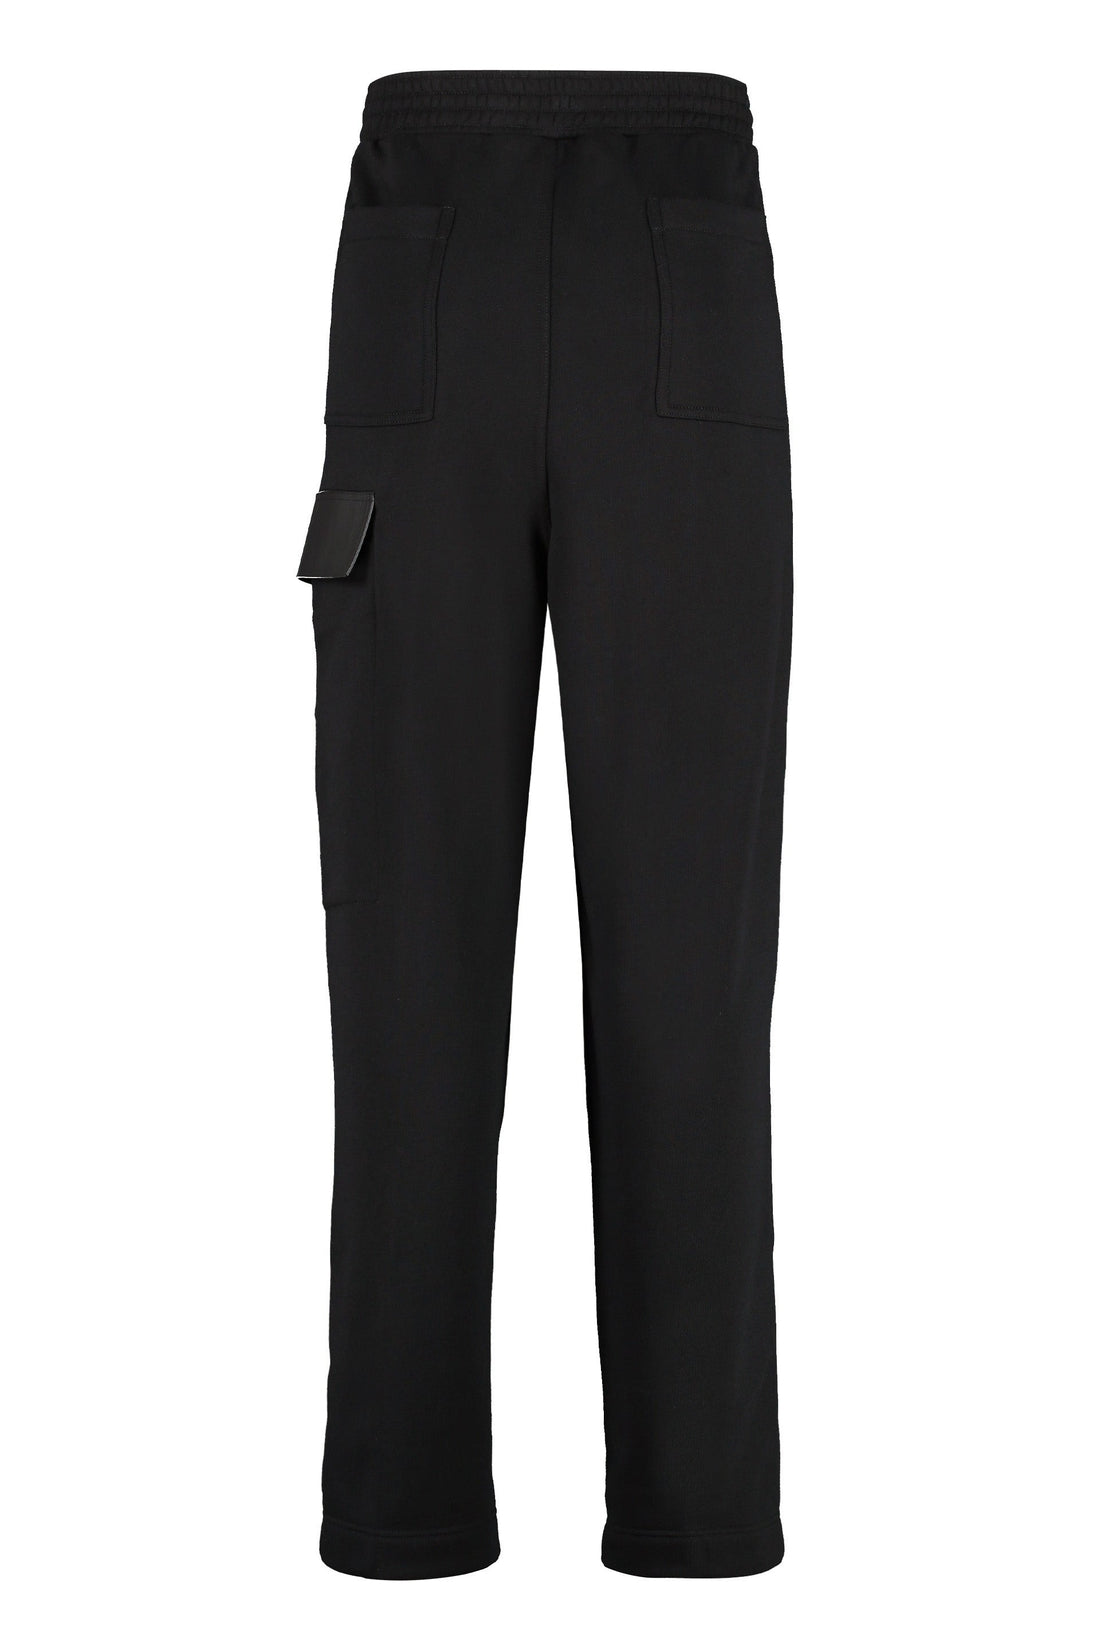 Givenchy-OUTLET-SALE-Cotton cargo-trousers-ARCHIVIST